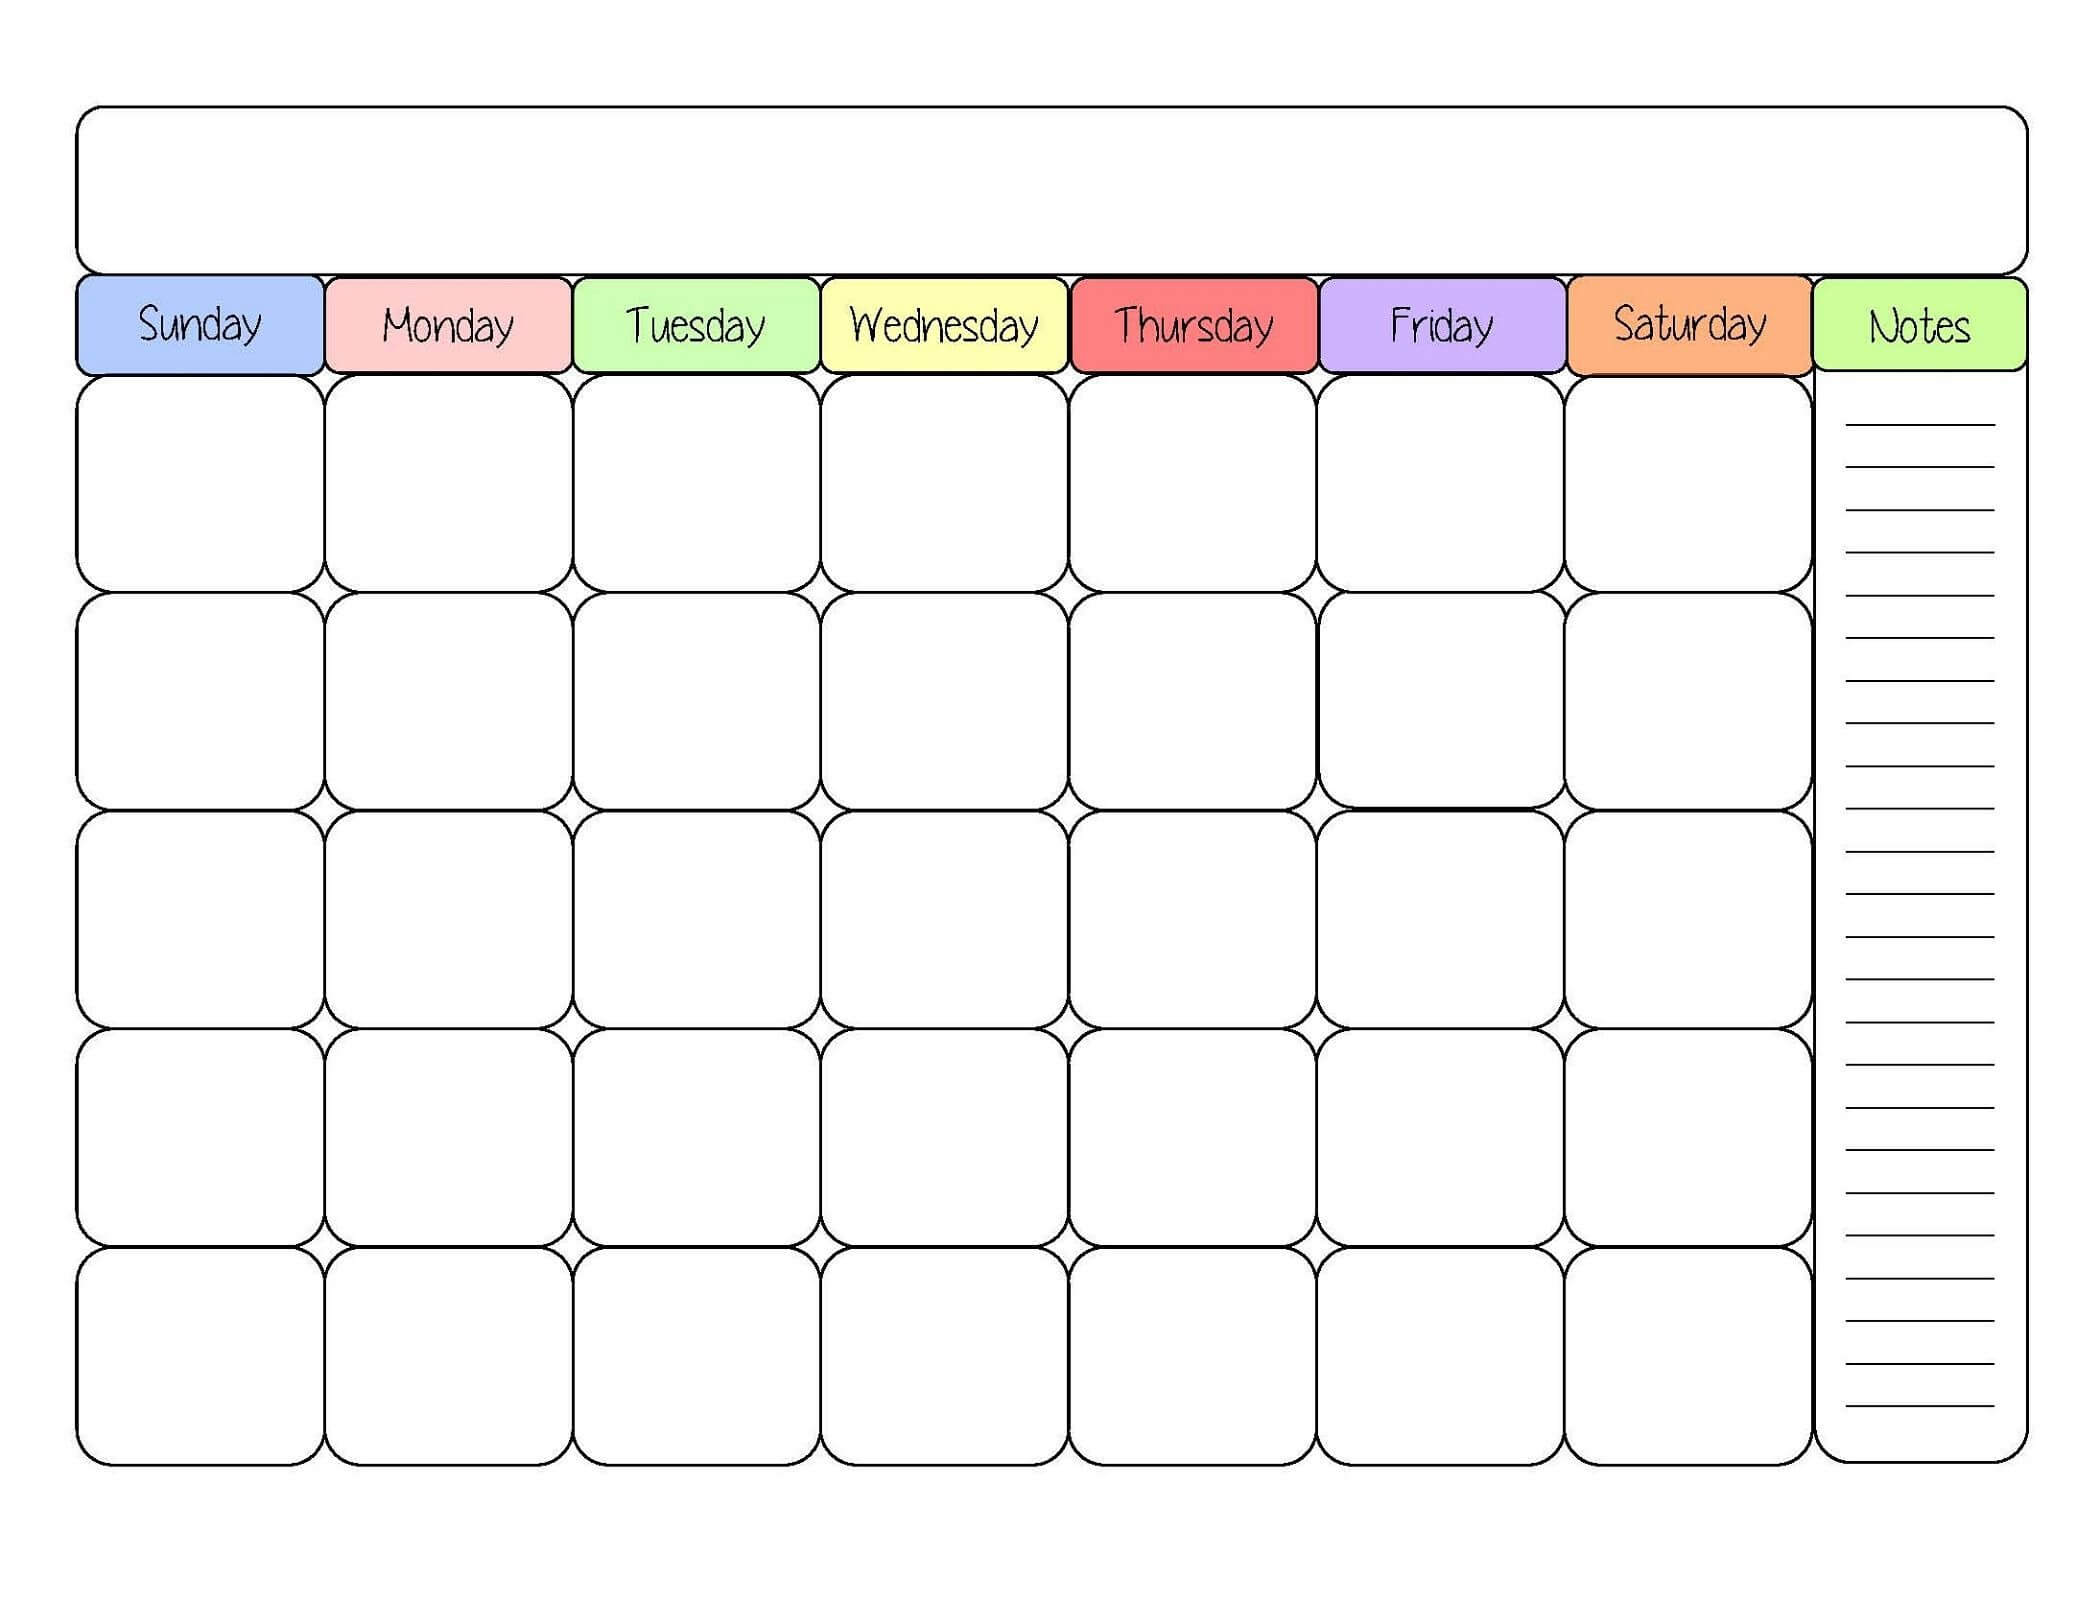 Sample Calendars To Print | Printable Calendar Template Intended For Blank Activity Calendar Template